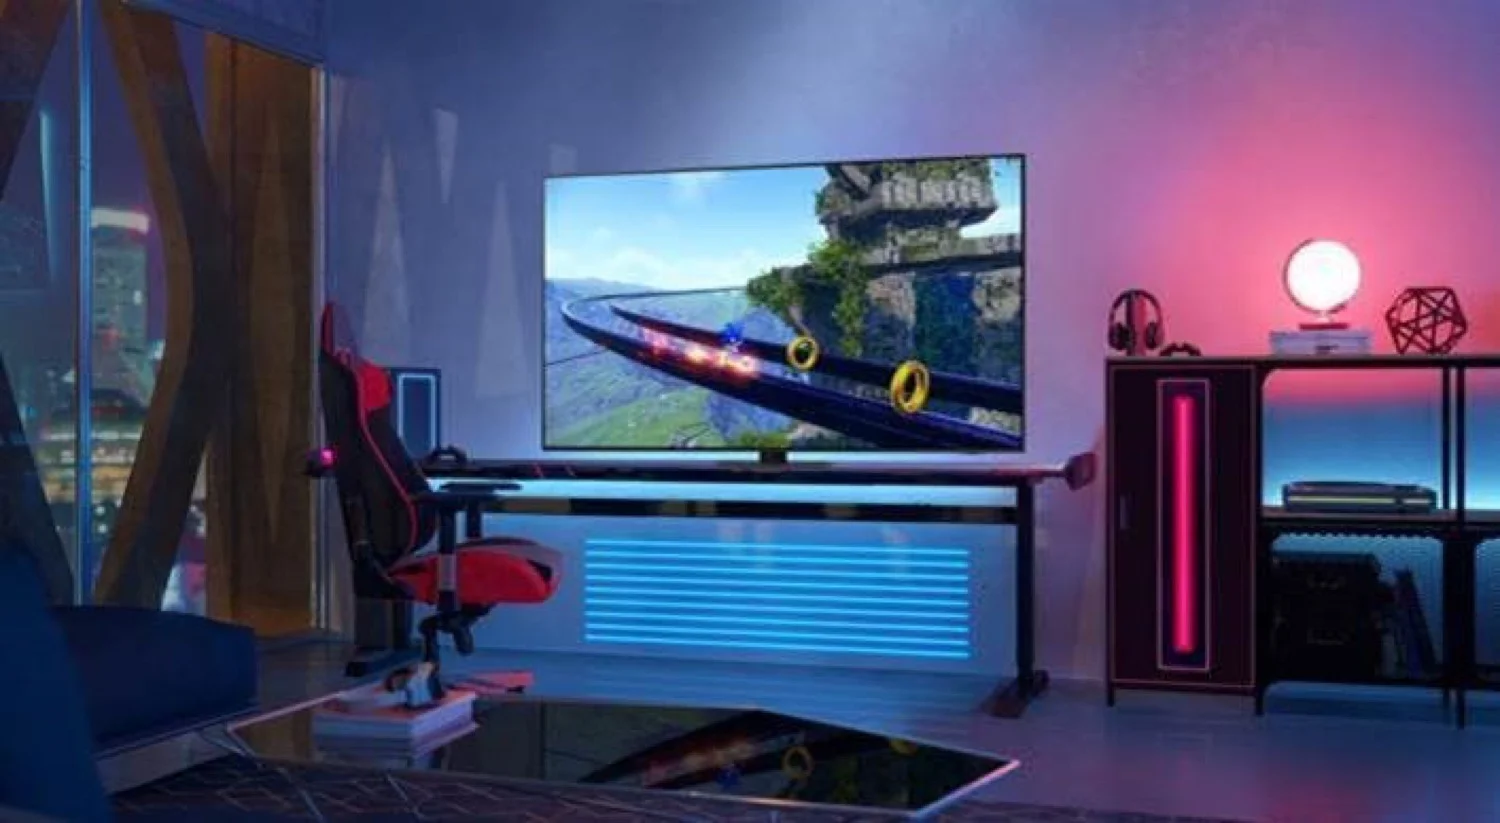 Actualiza tu experiencia gamer con Neo QLED Gaming TV